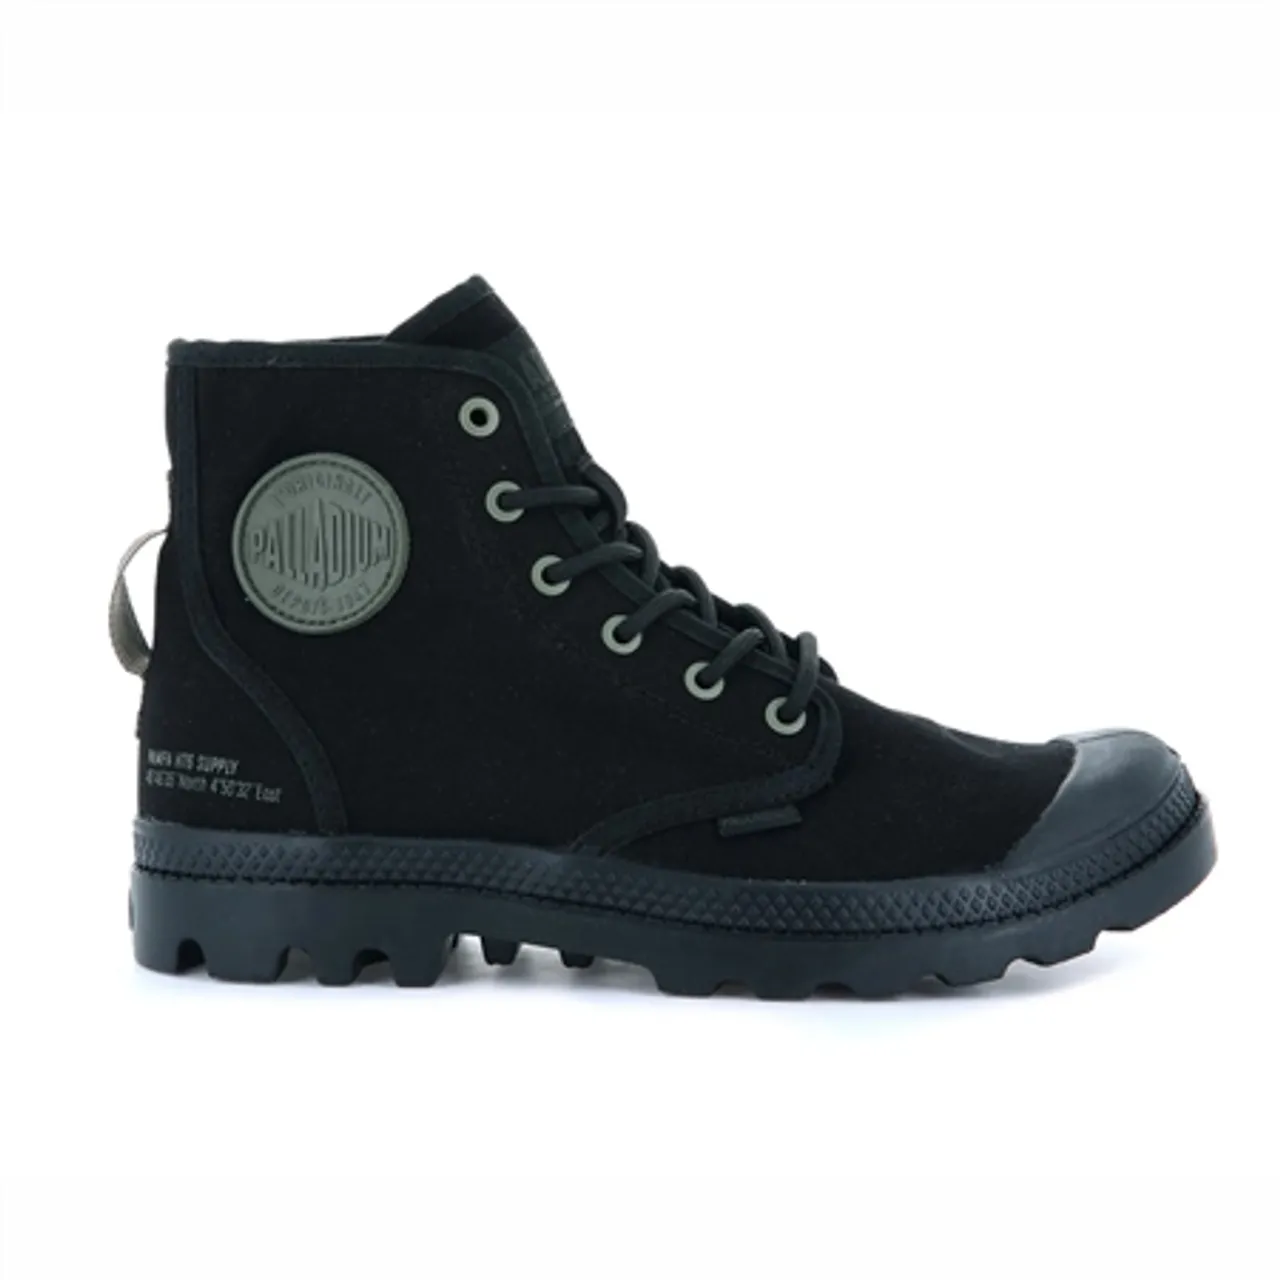 Palladium Pampa Hi HTG Supply Boots - Black - UK 8 (EU 42)